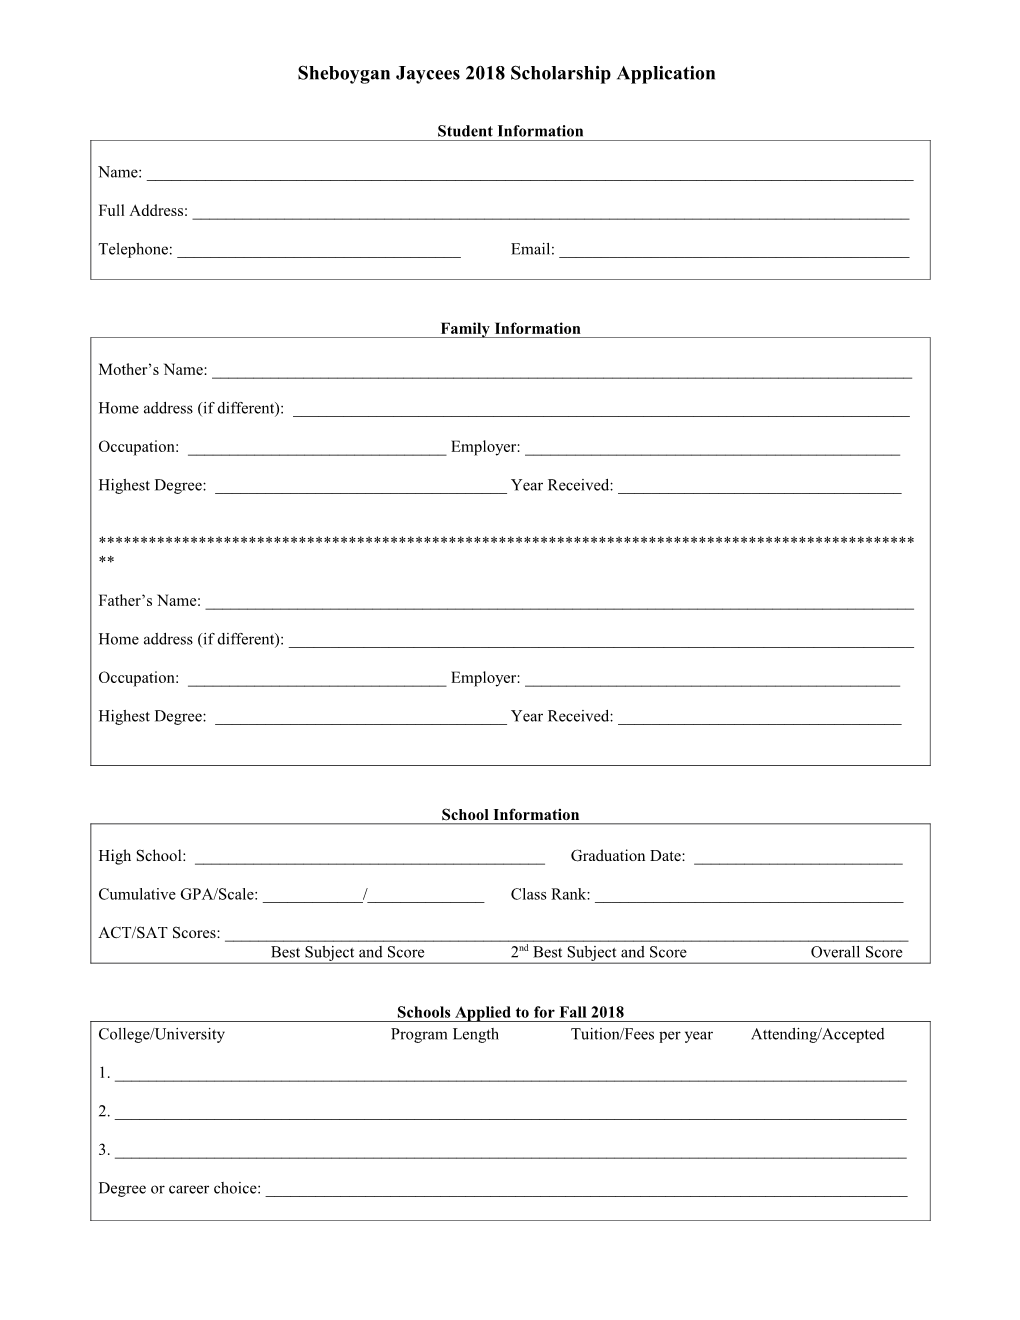 Sheboygan Jaycees 2018 Scholarship Application